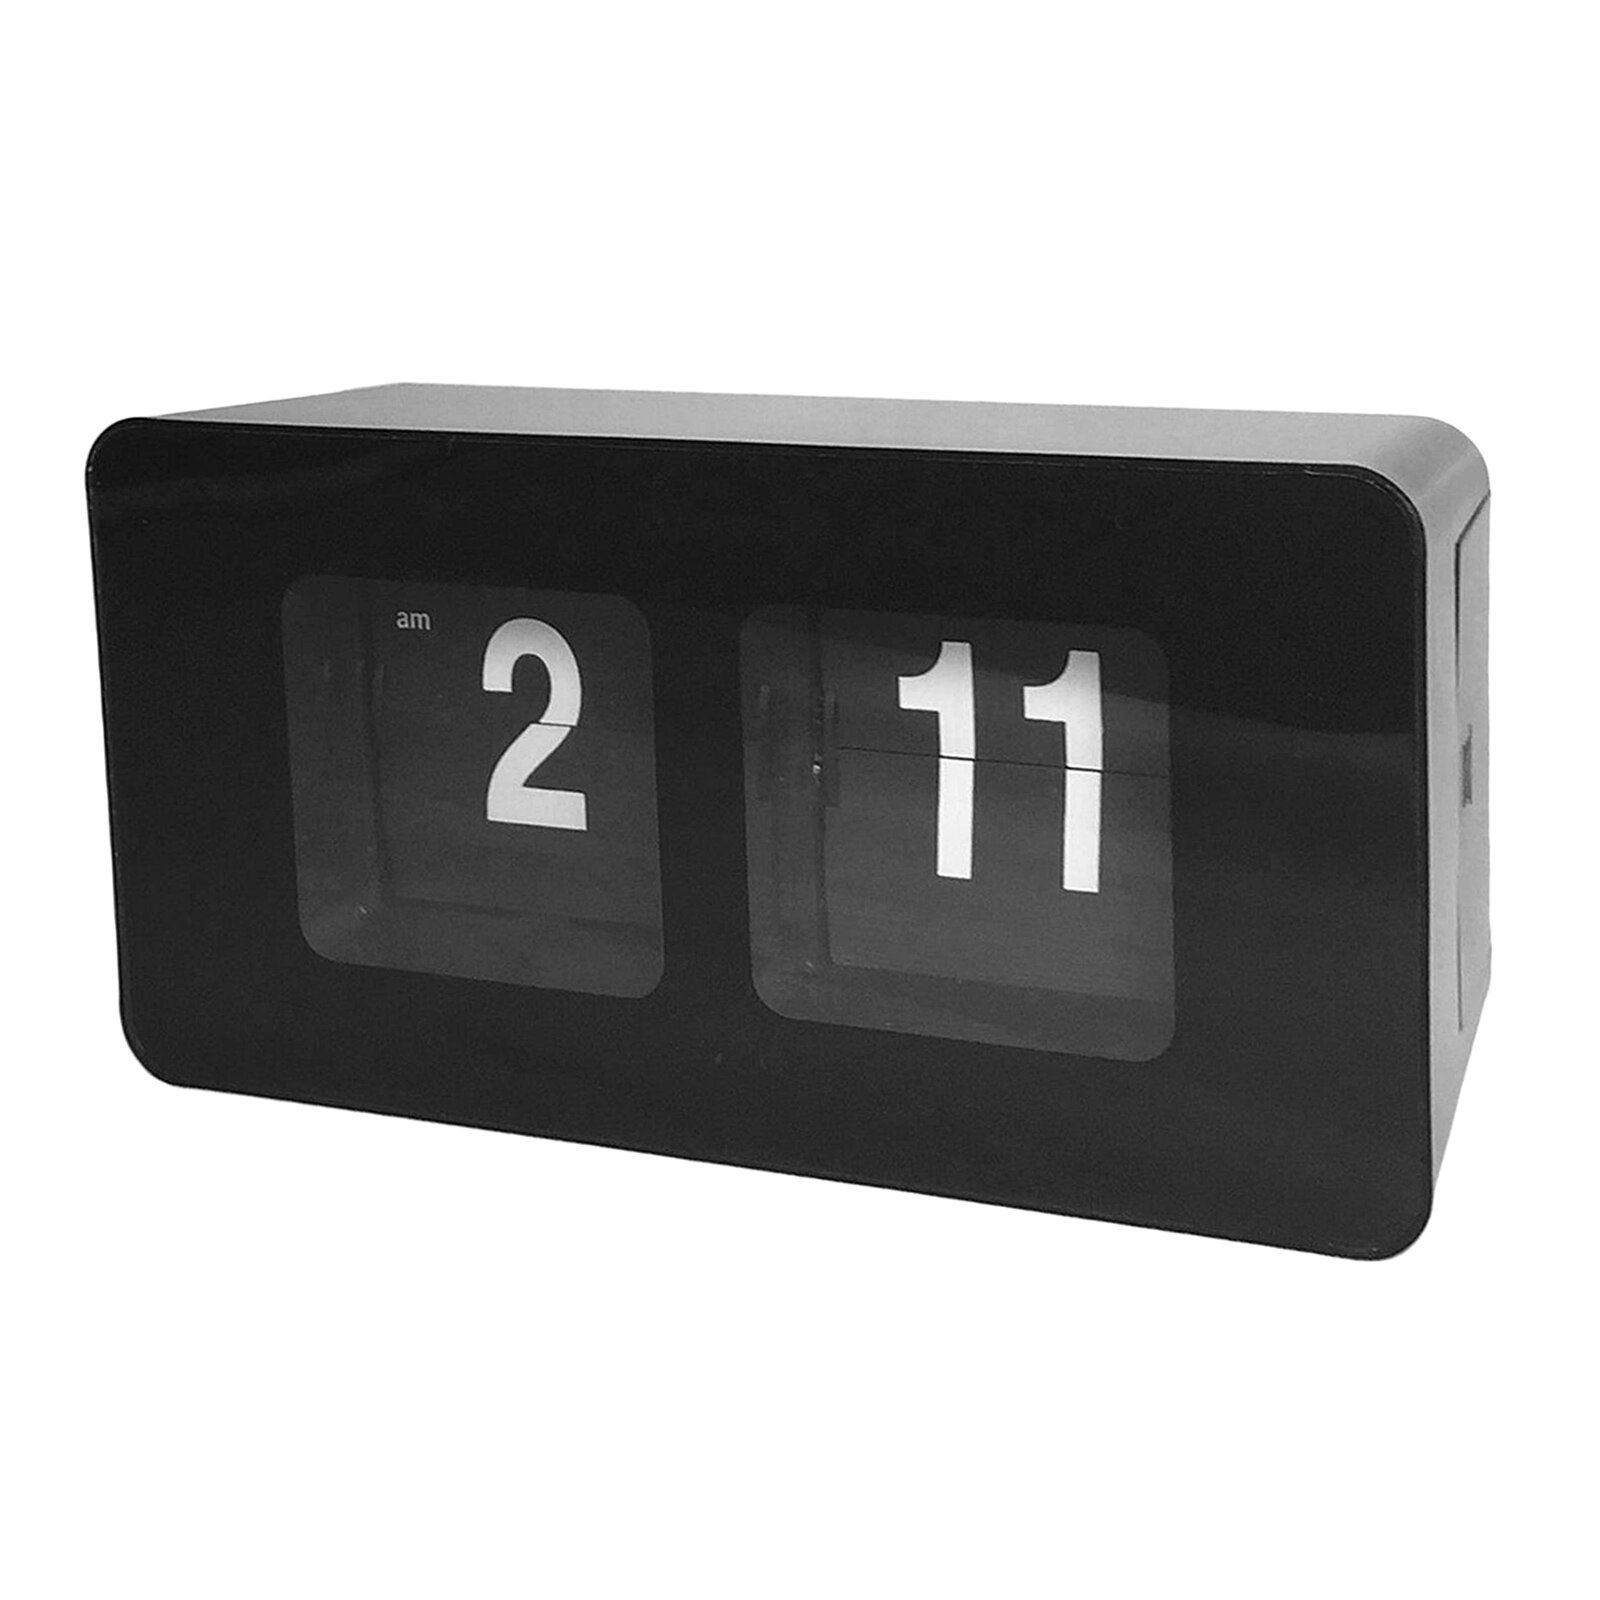 Auto Flip Clock File Down Page Clocks Desk Clock Smart Light Clock for Home Flip Clock Desk Tube Big Vintage Alarm Table: Black